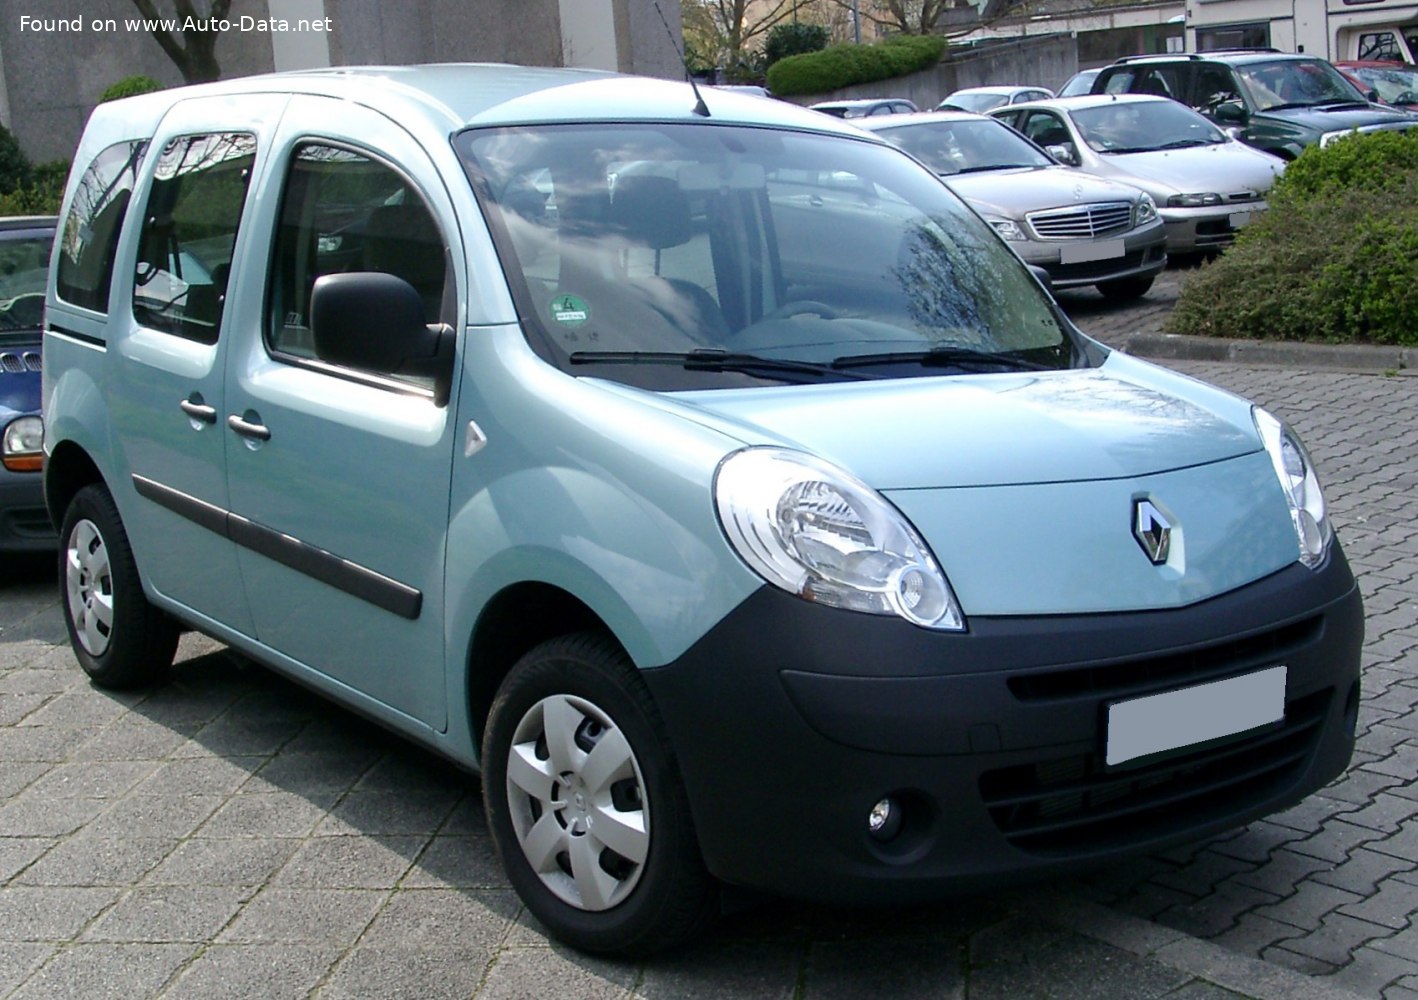 Renault KANGOO 1.2 I 60 CV GPL - Site Officiel Ford [concession